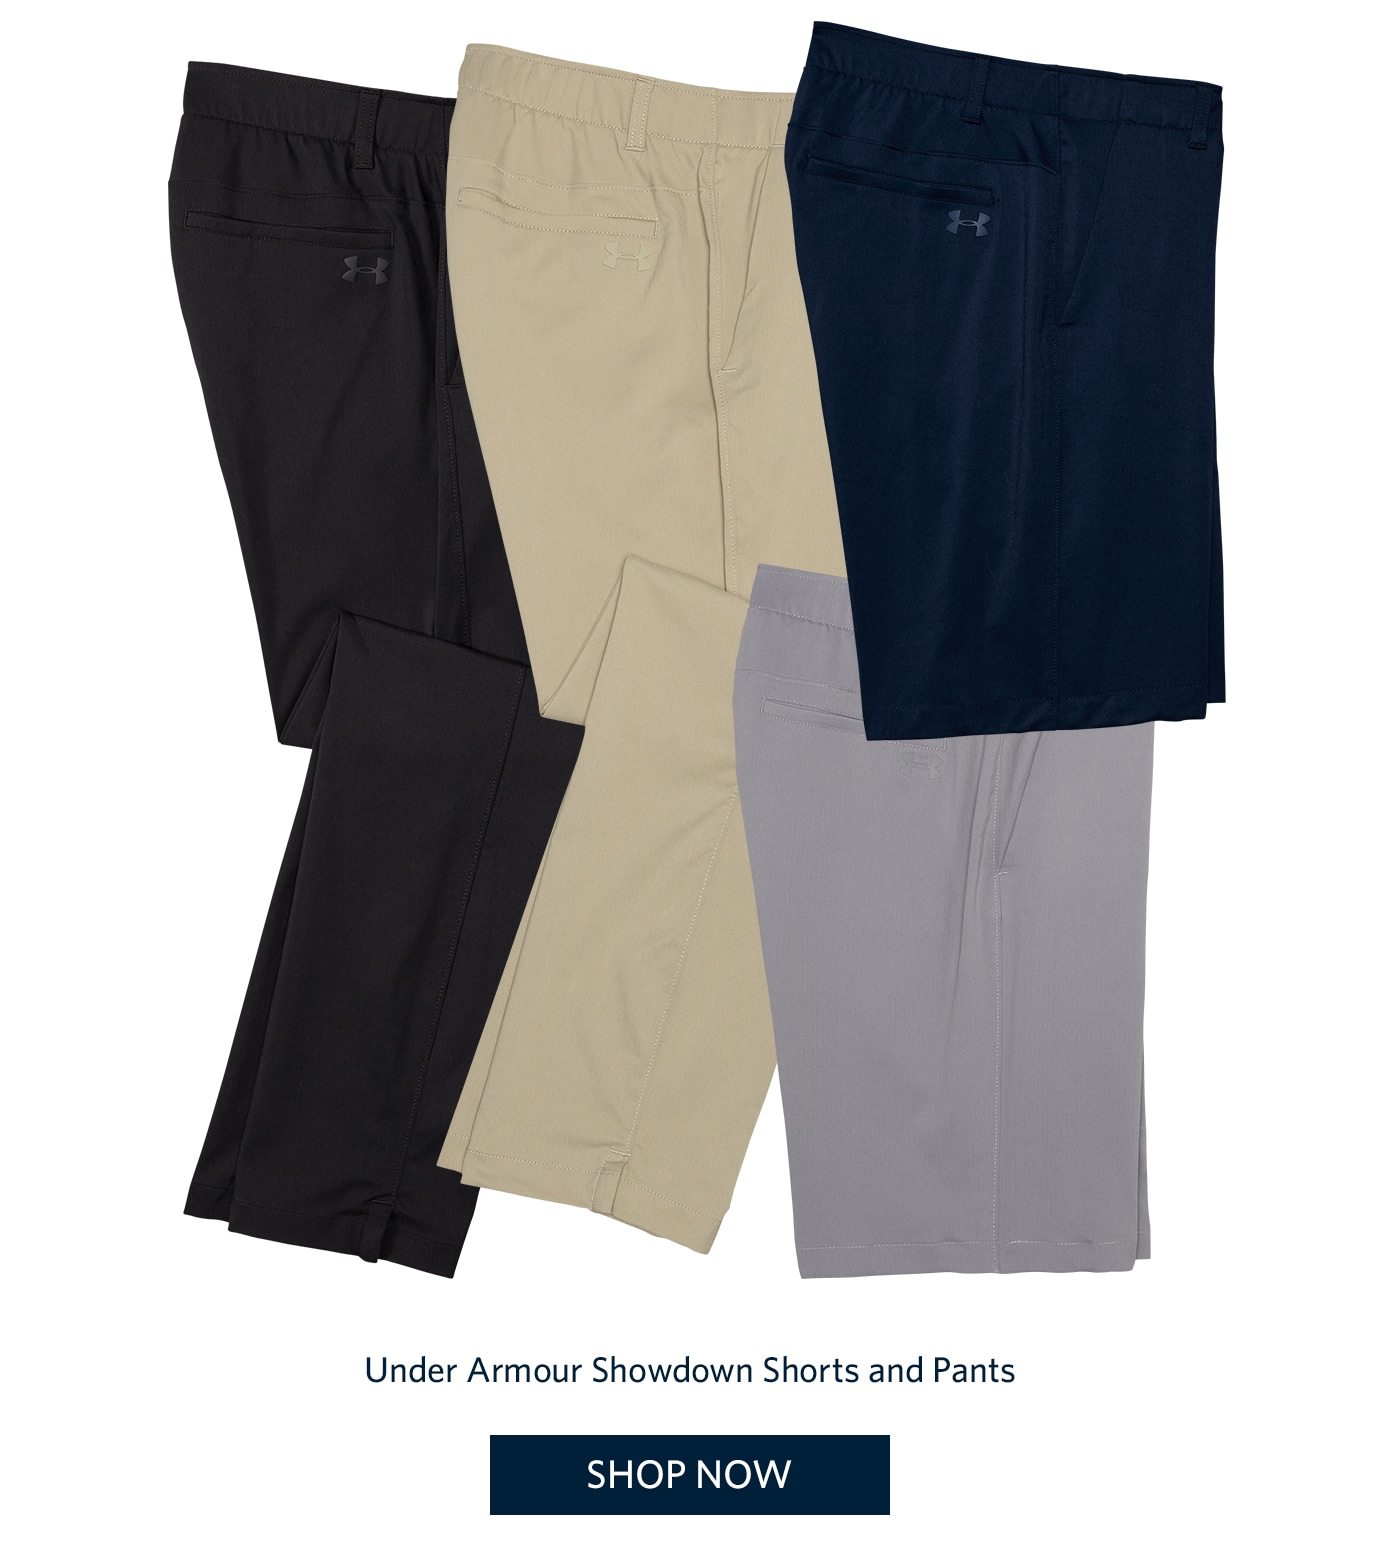 Under Armour Showdown Shorts and Pants | SHOP NOW